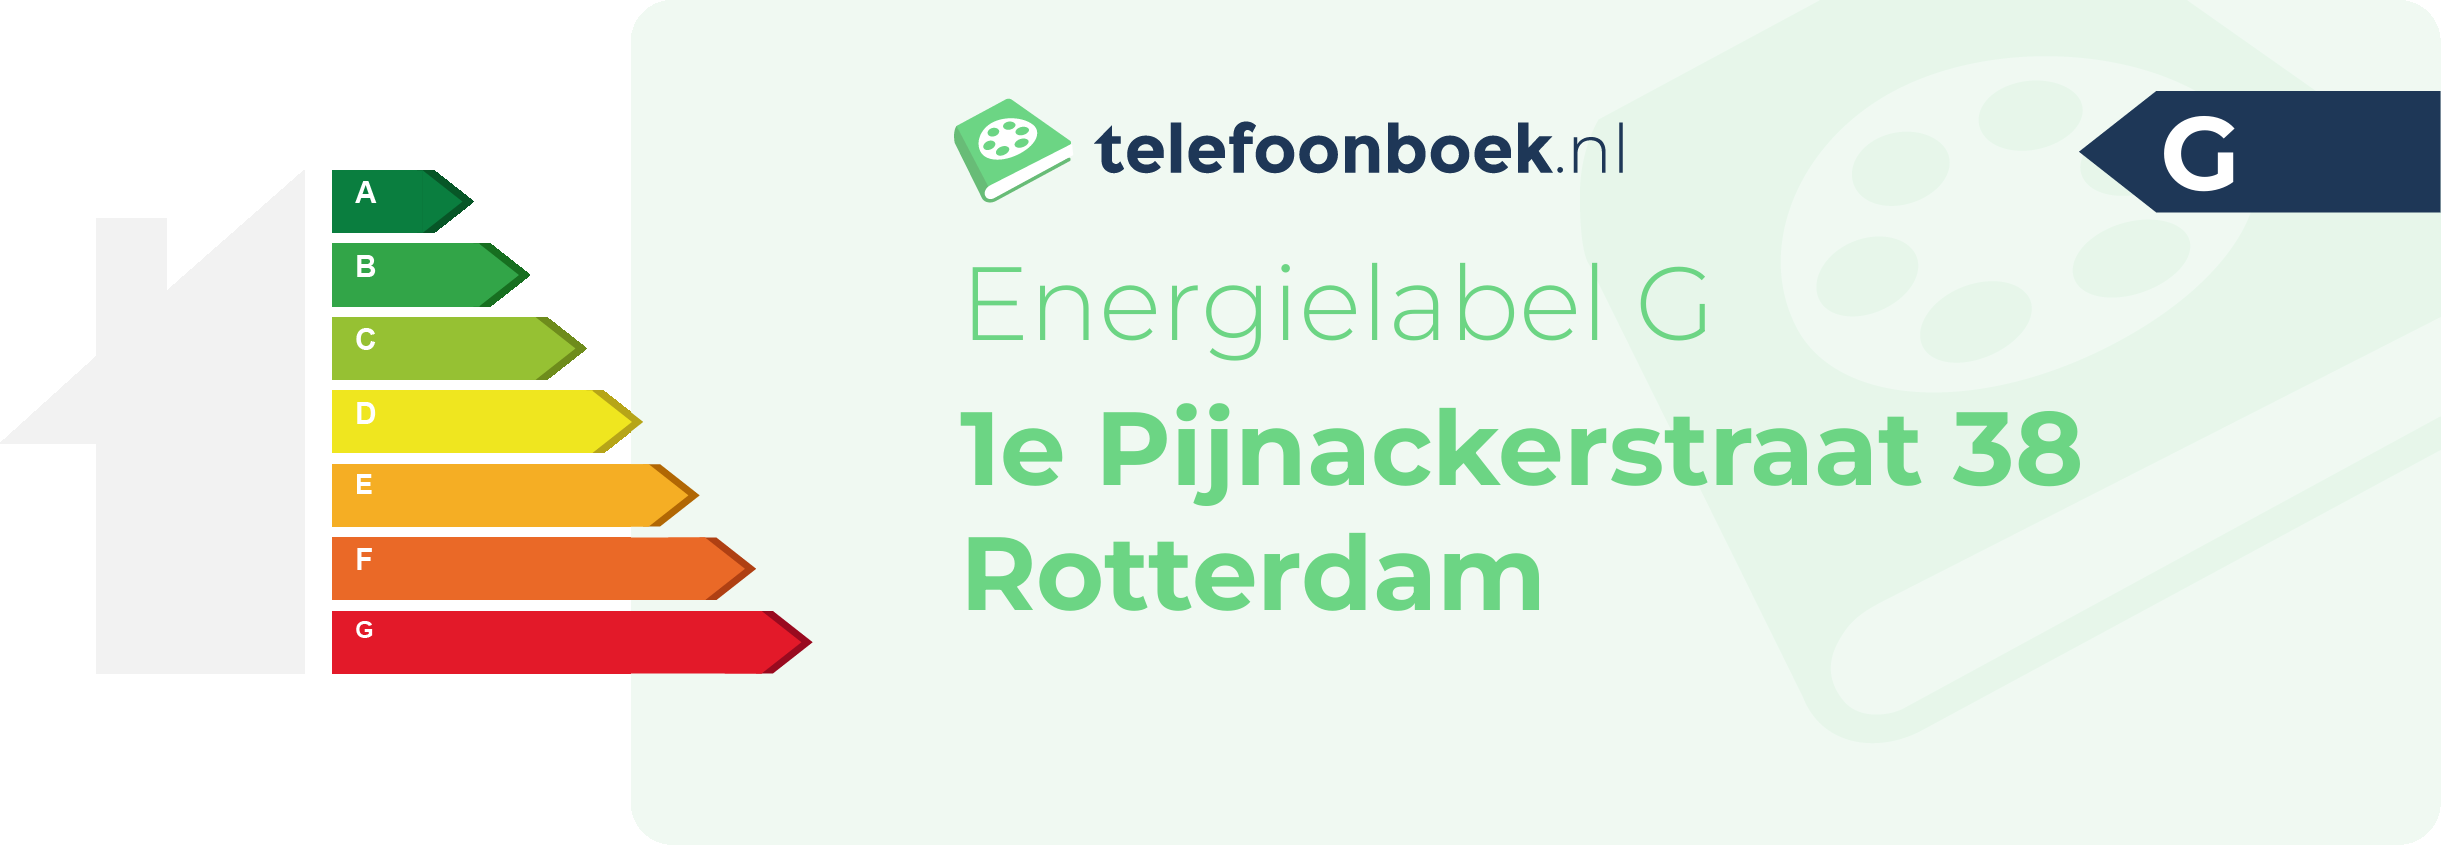 Energielabel 1e Pijnackerstraat 38 Rotterdam